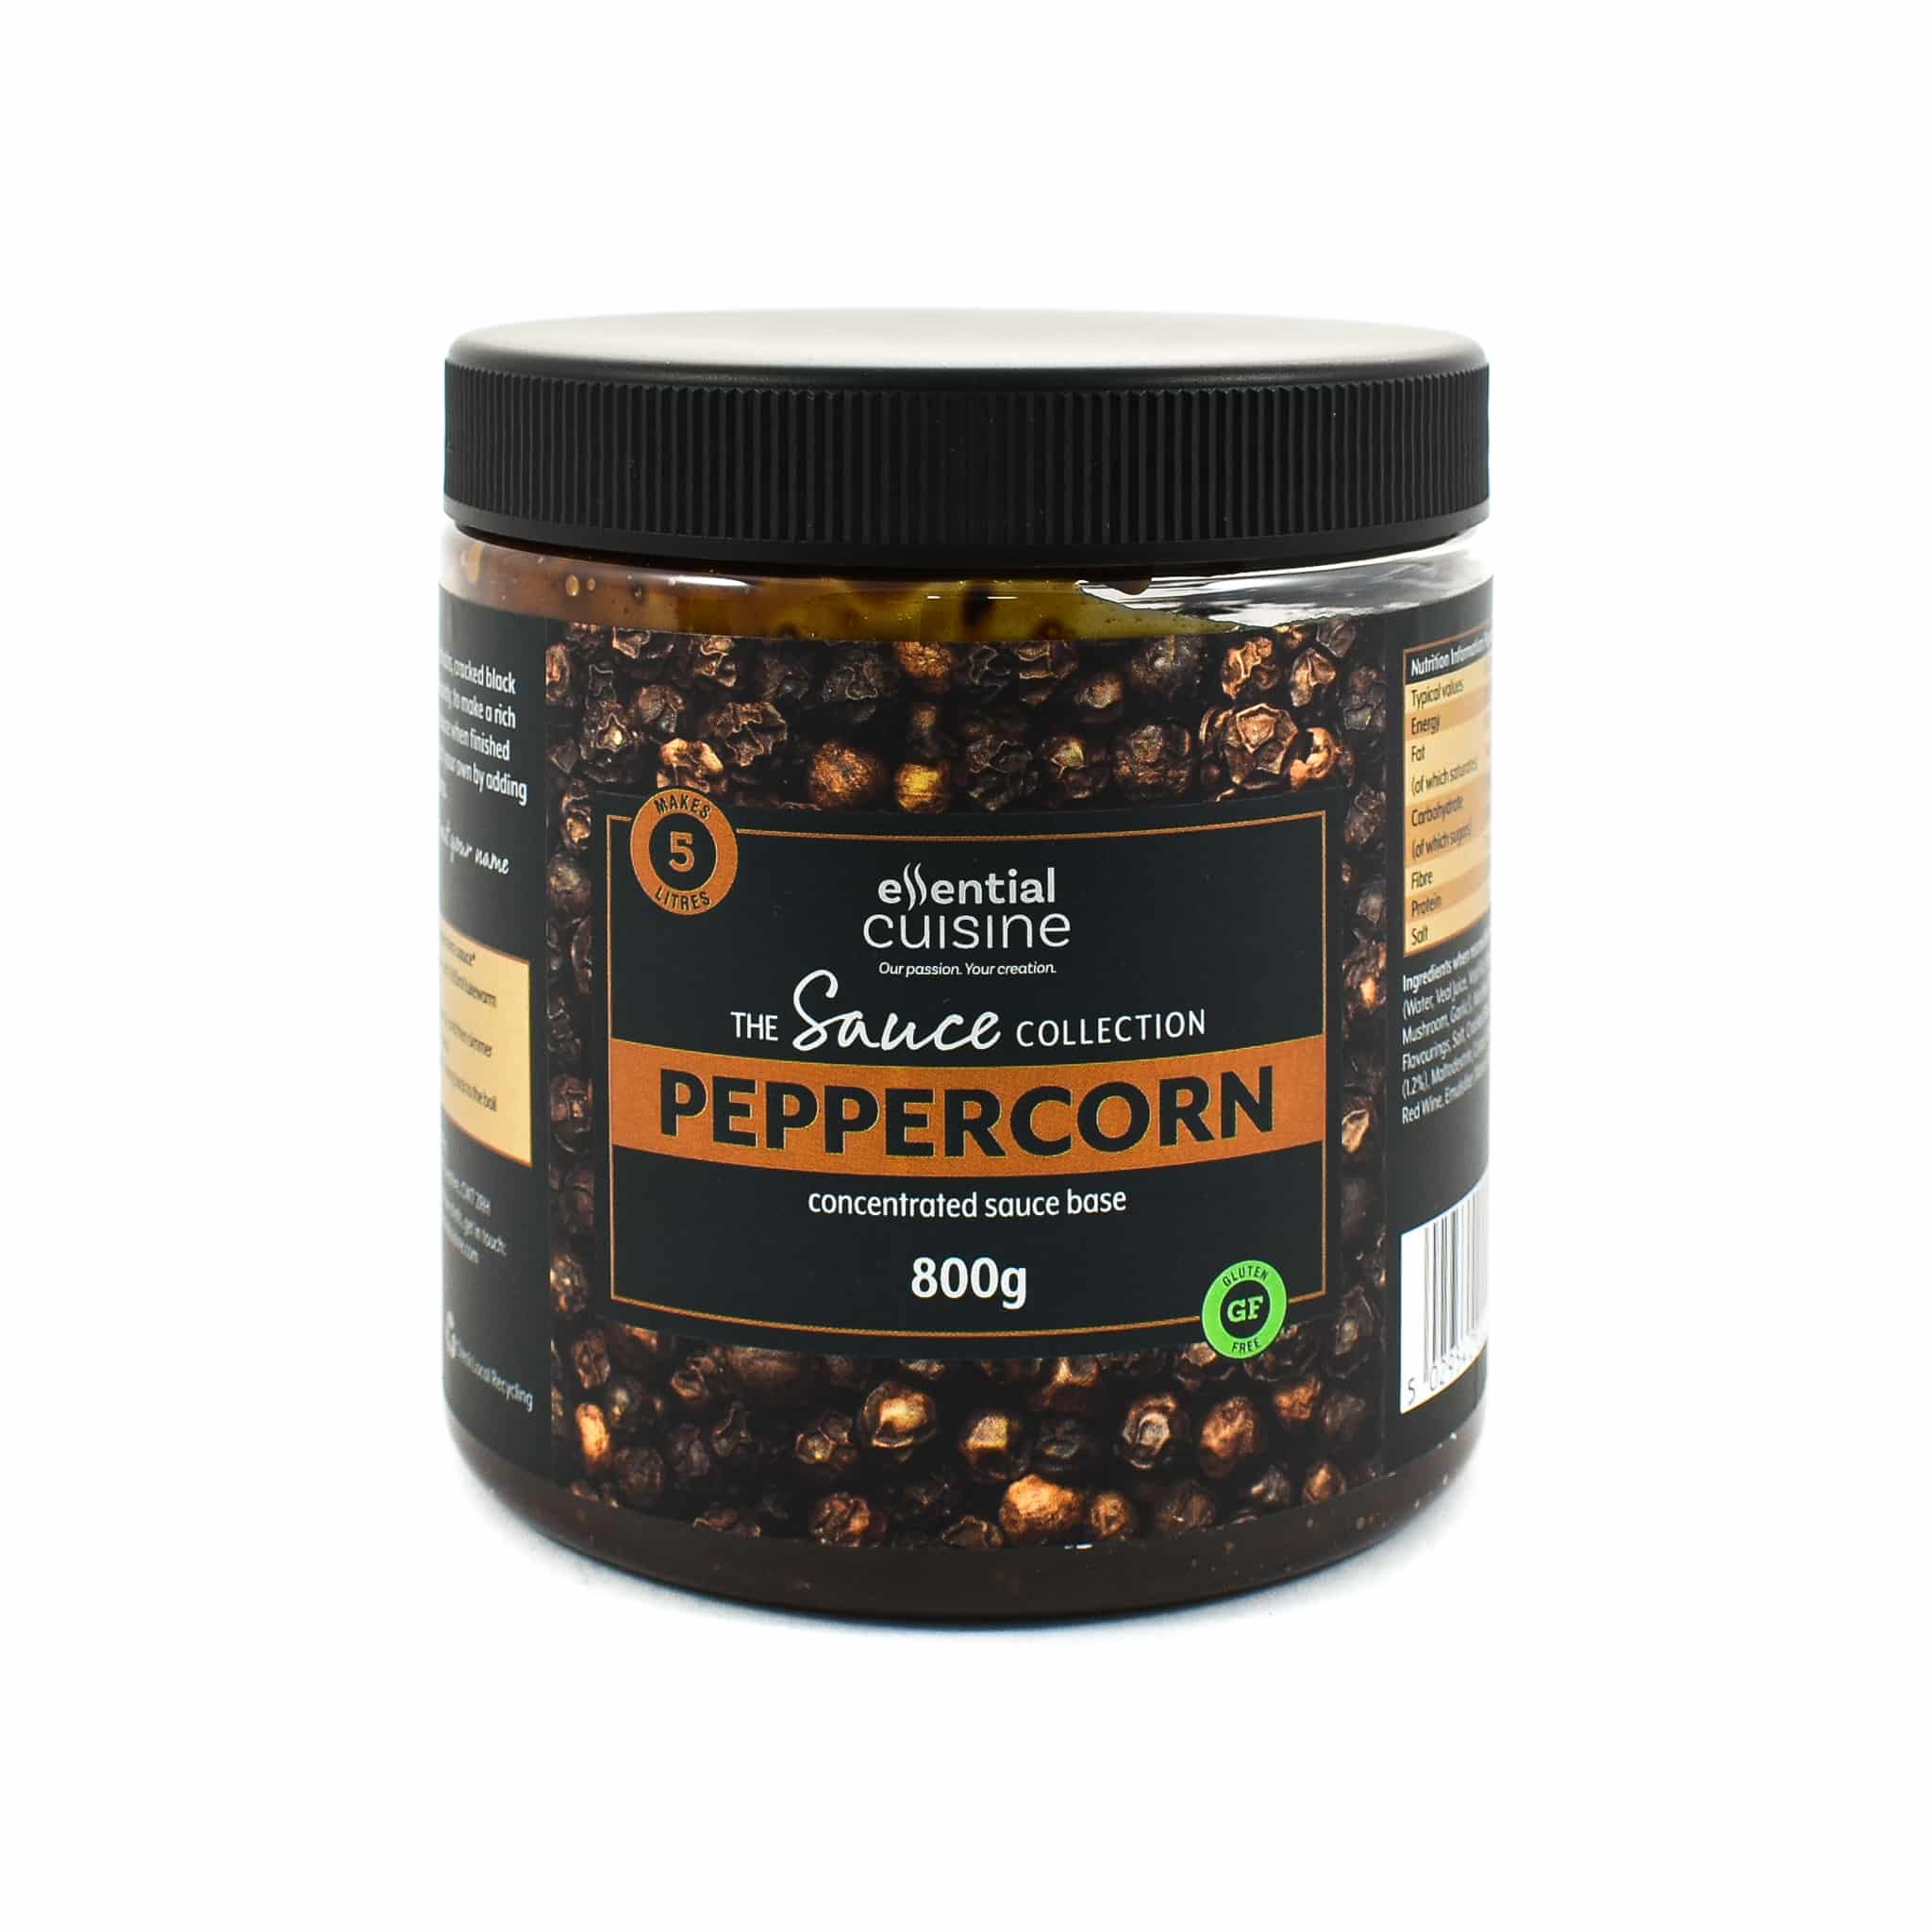 Essential Cuisine Peppercorn Sauce Base 800g